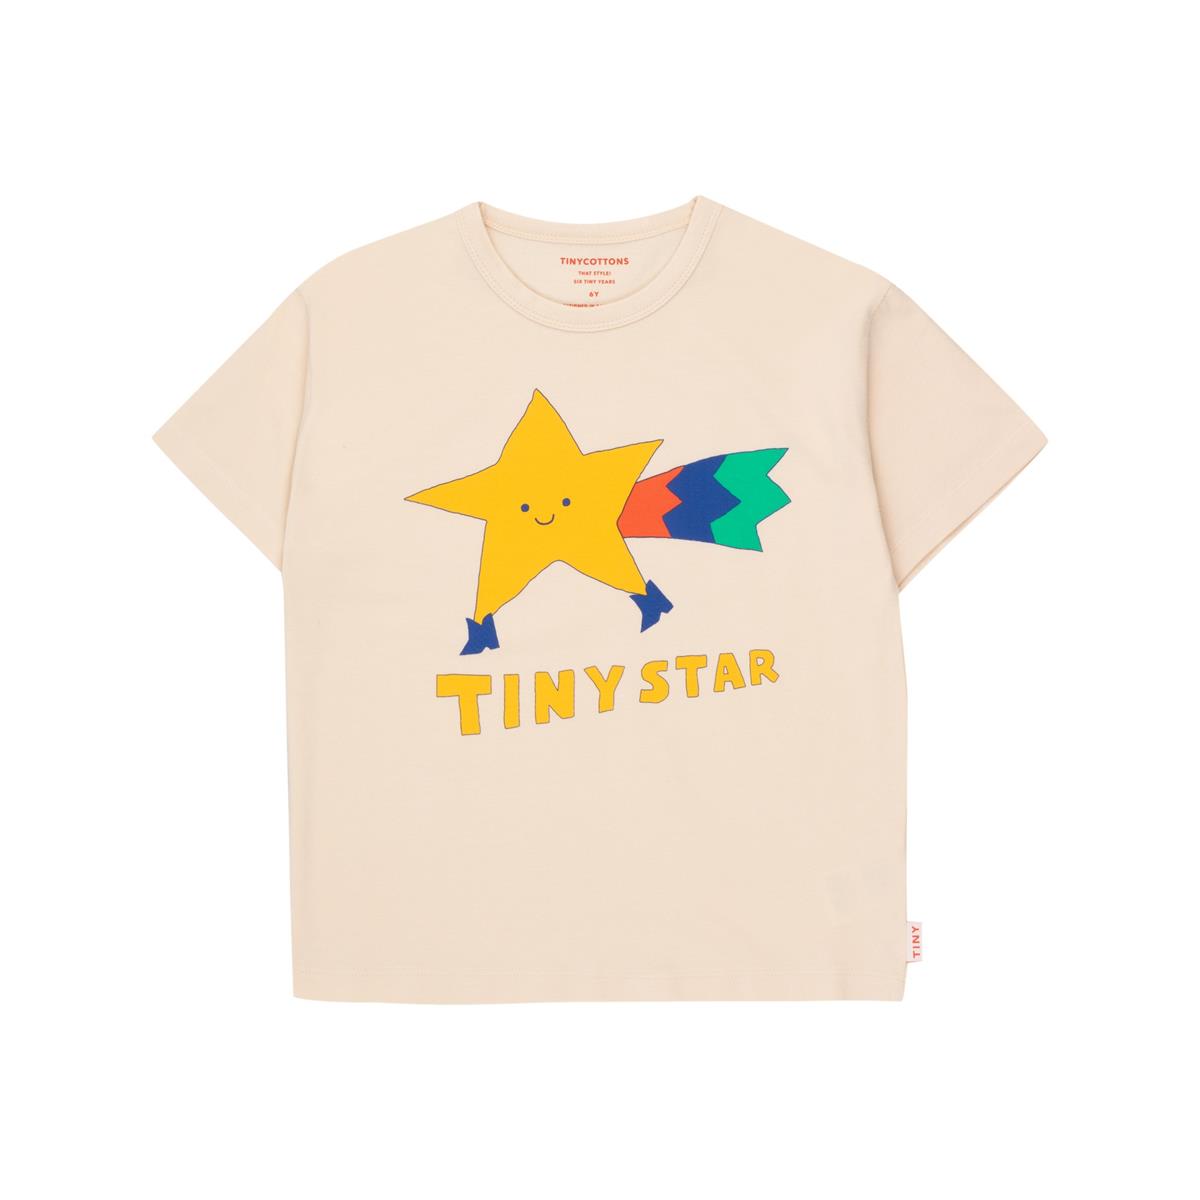 TINYCOTTONS - TINY STAR TEE - light cream